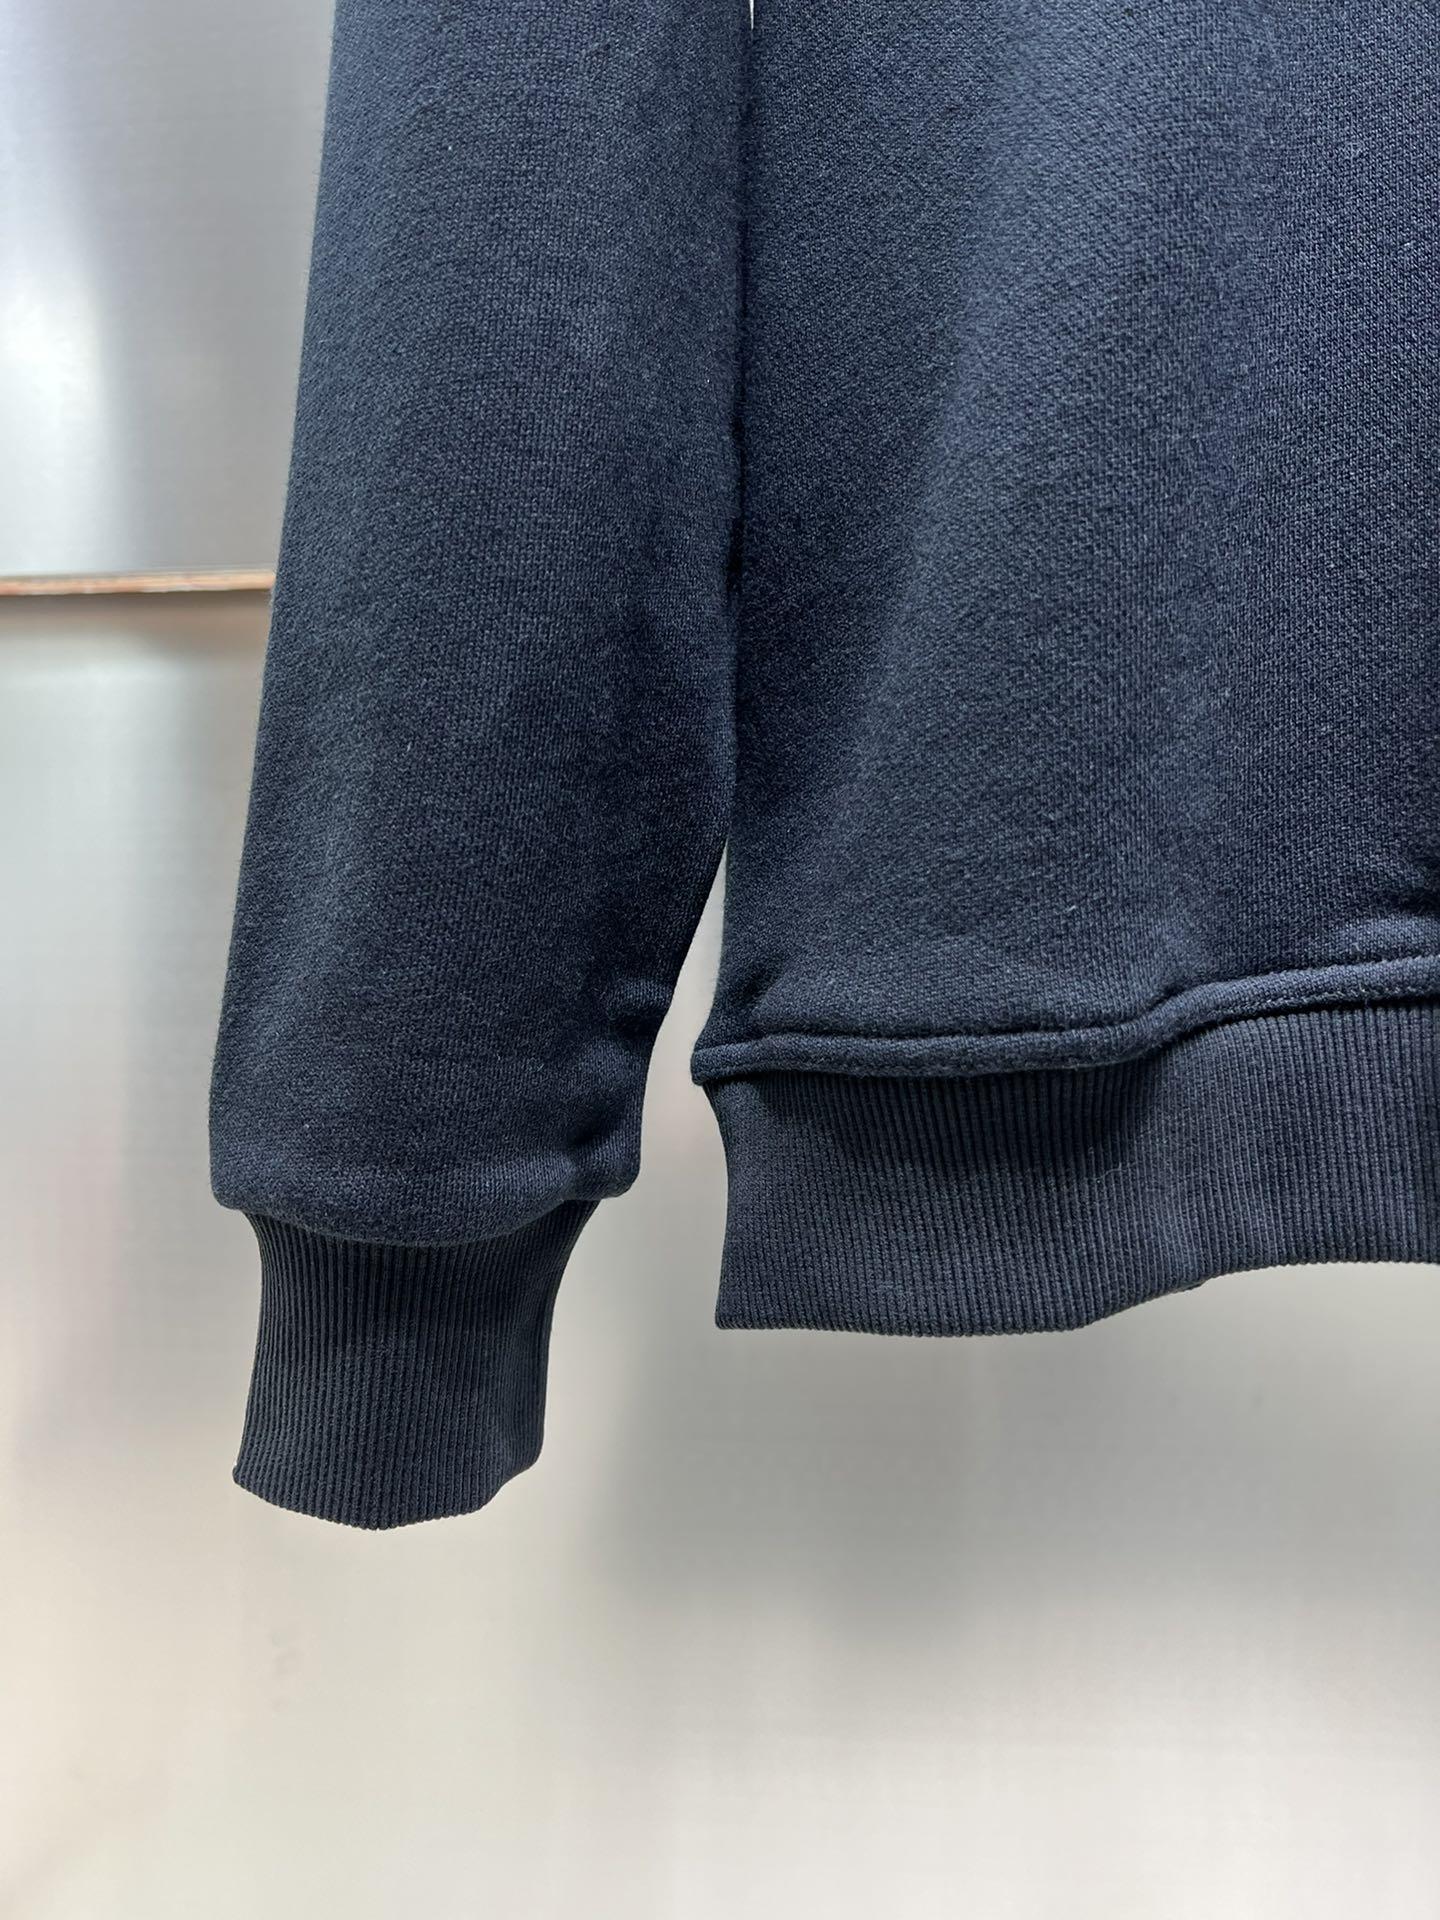 prorsum-label-cotton-sweatshirt-4817_16845004126-1000